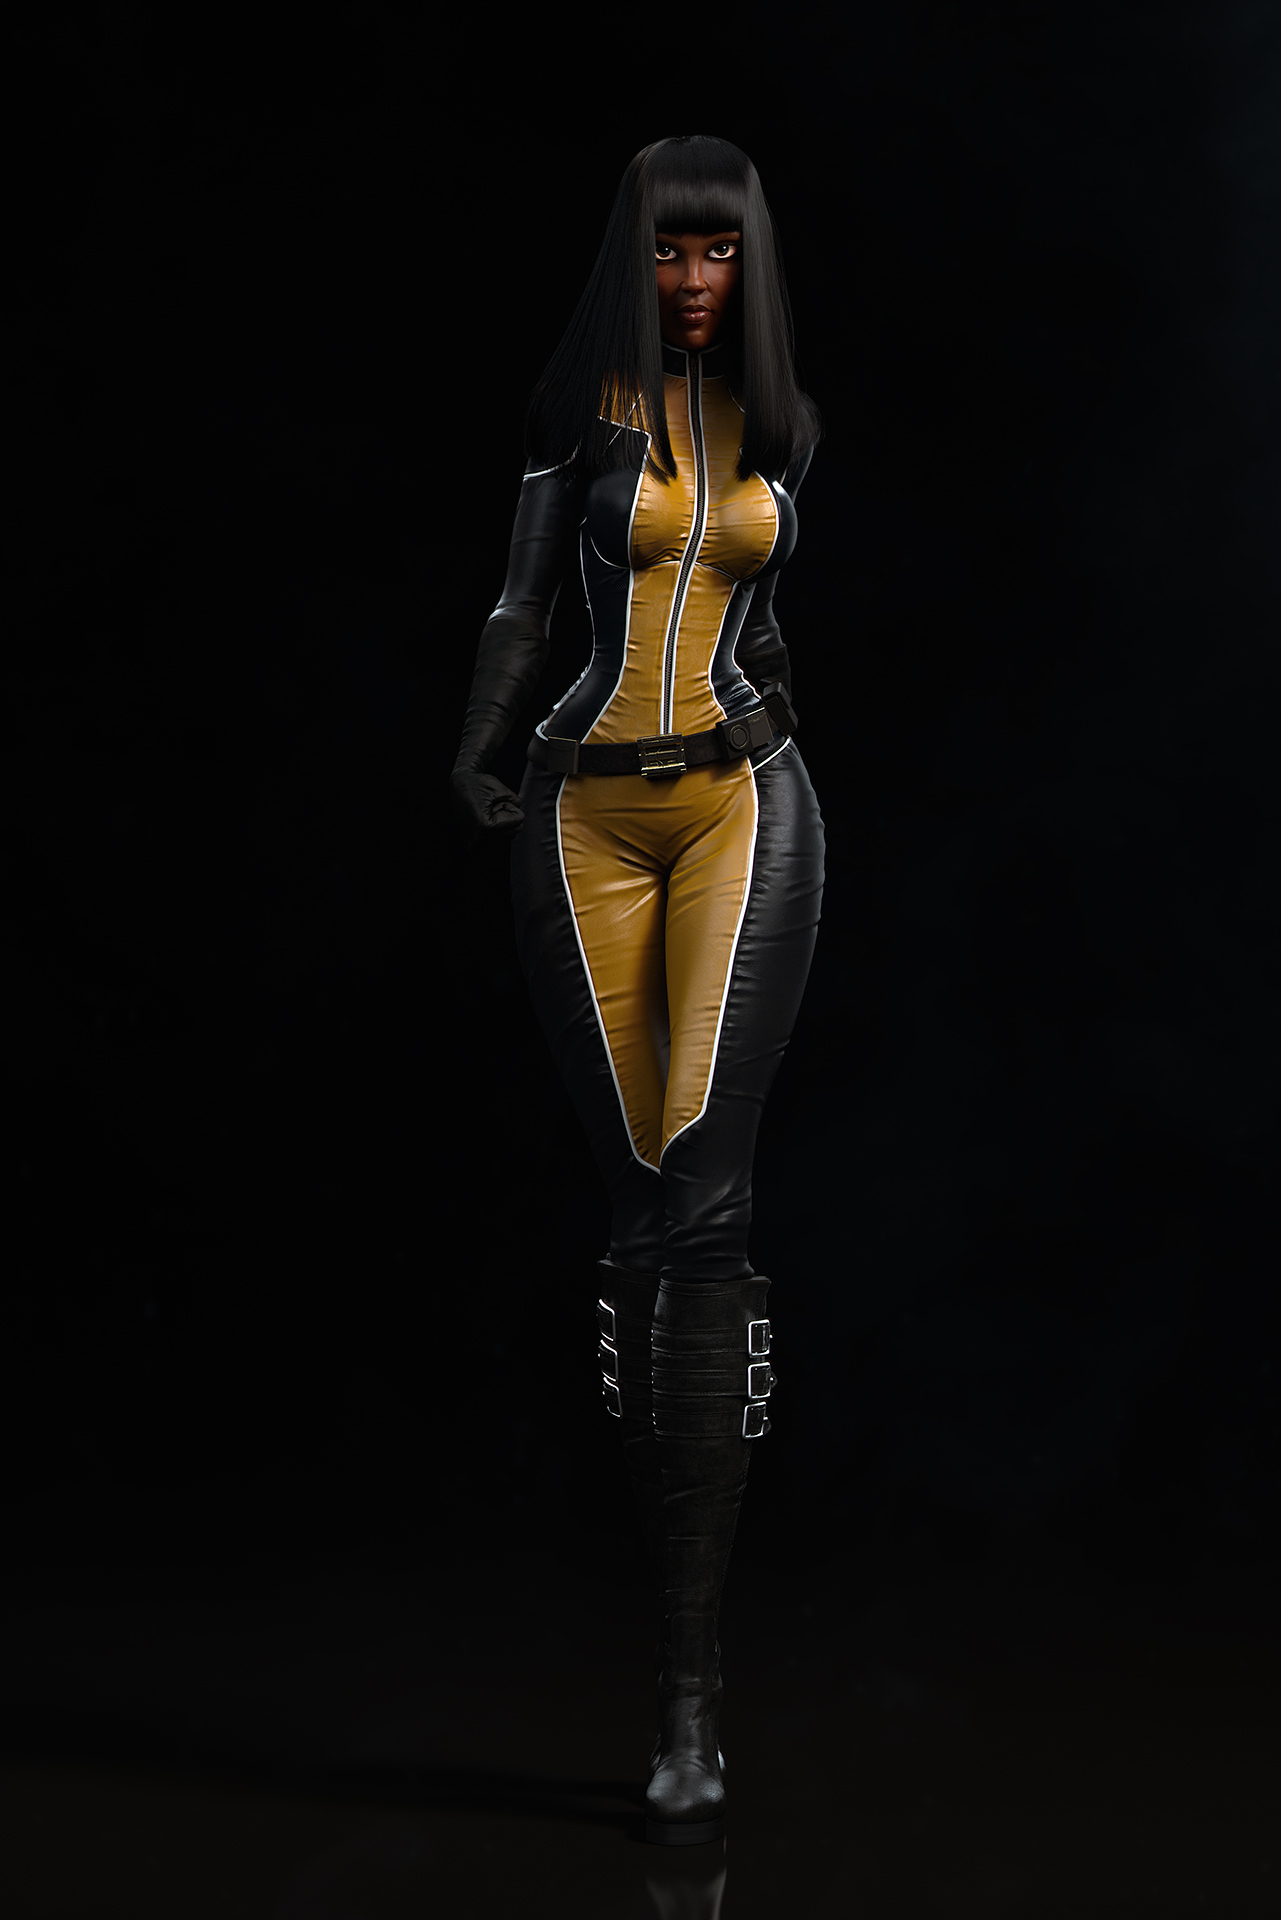 Fireproof - character modeling and design from artist concept - epic studios kenya 3D design and 3D Animation Kenya